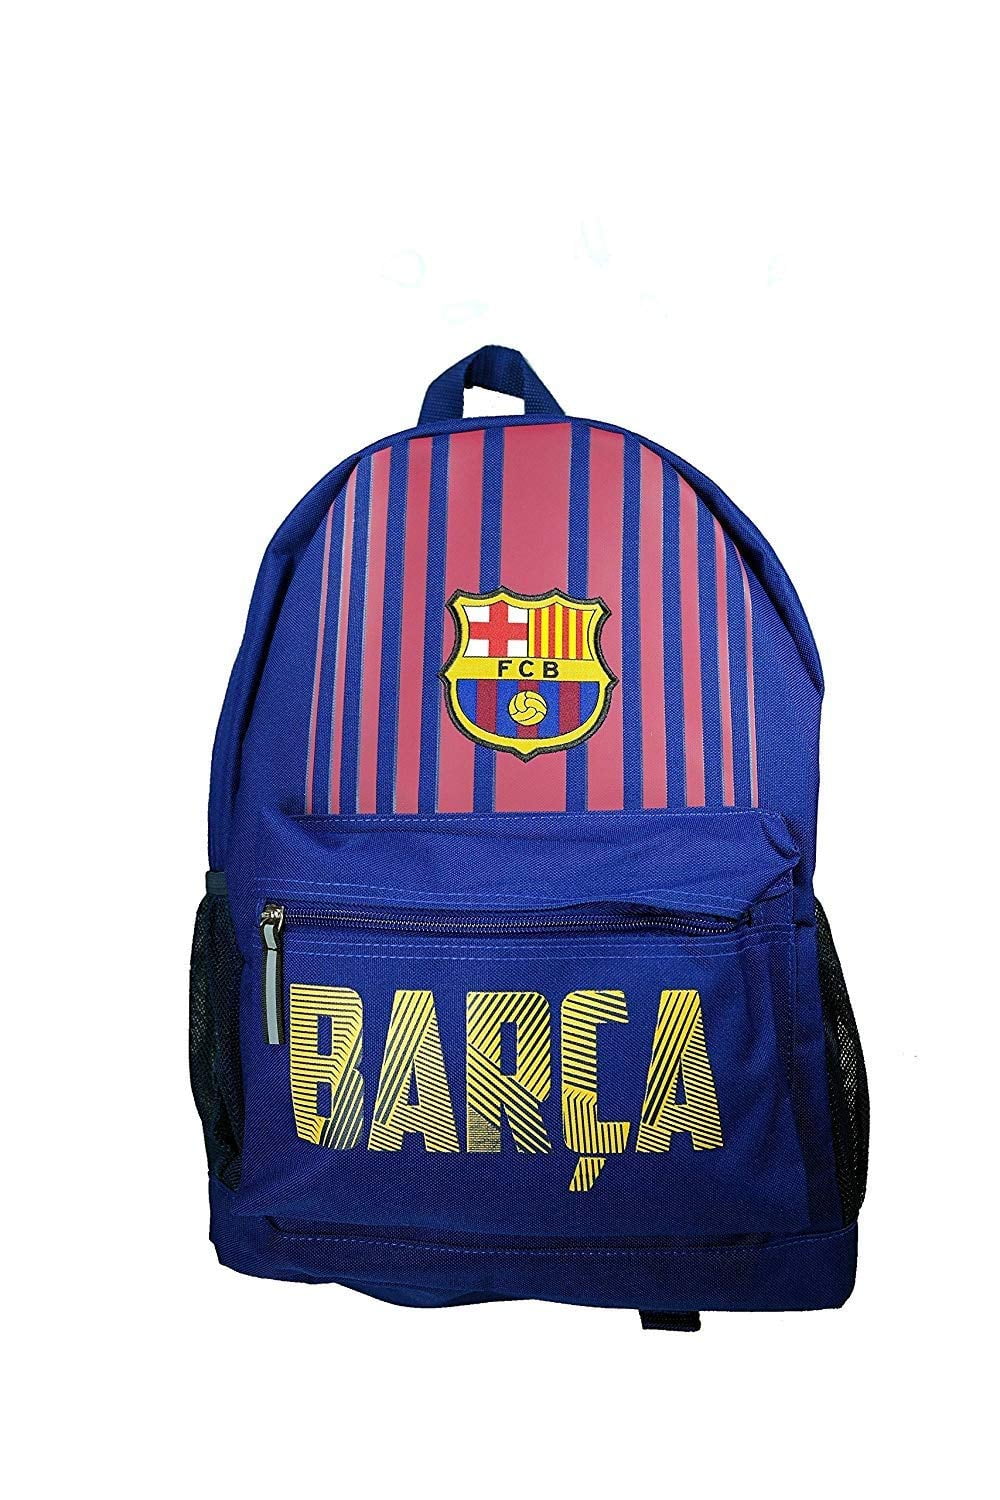 LUGGAGE GIFT F.C Barcelona Backpack 